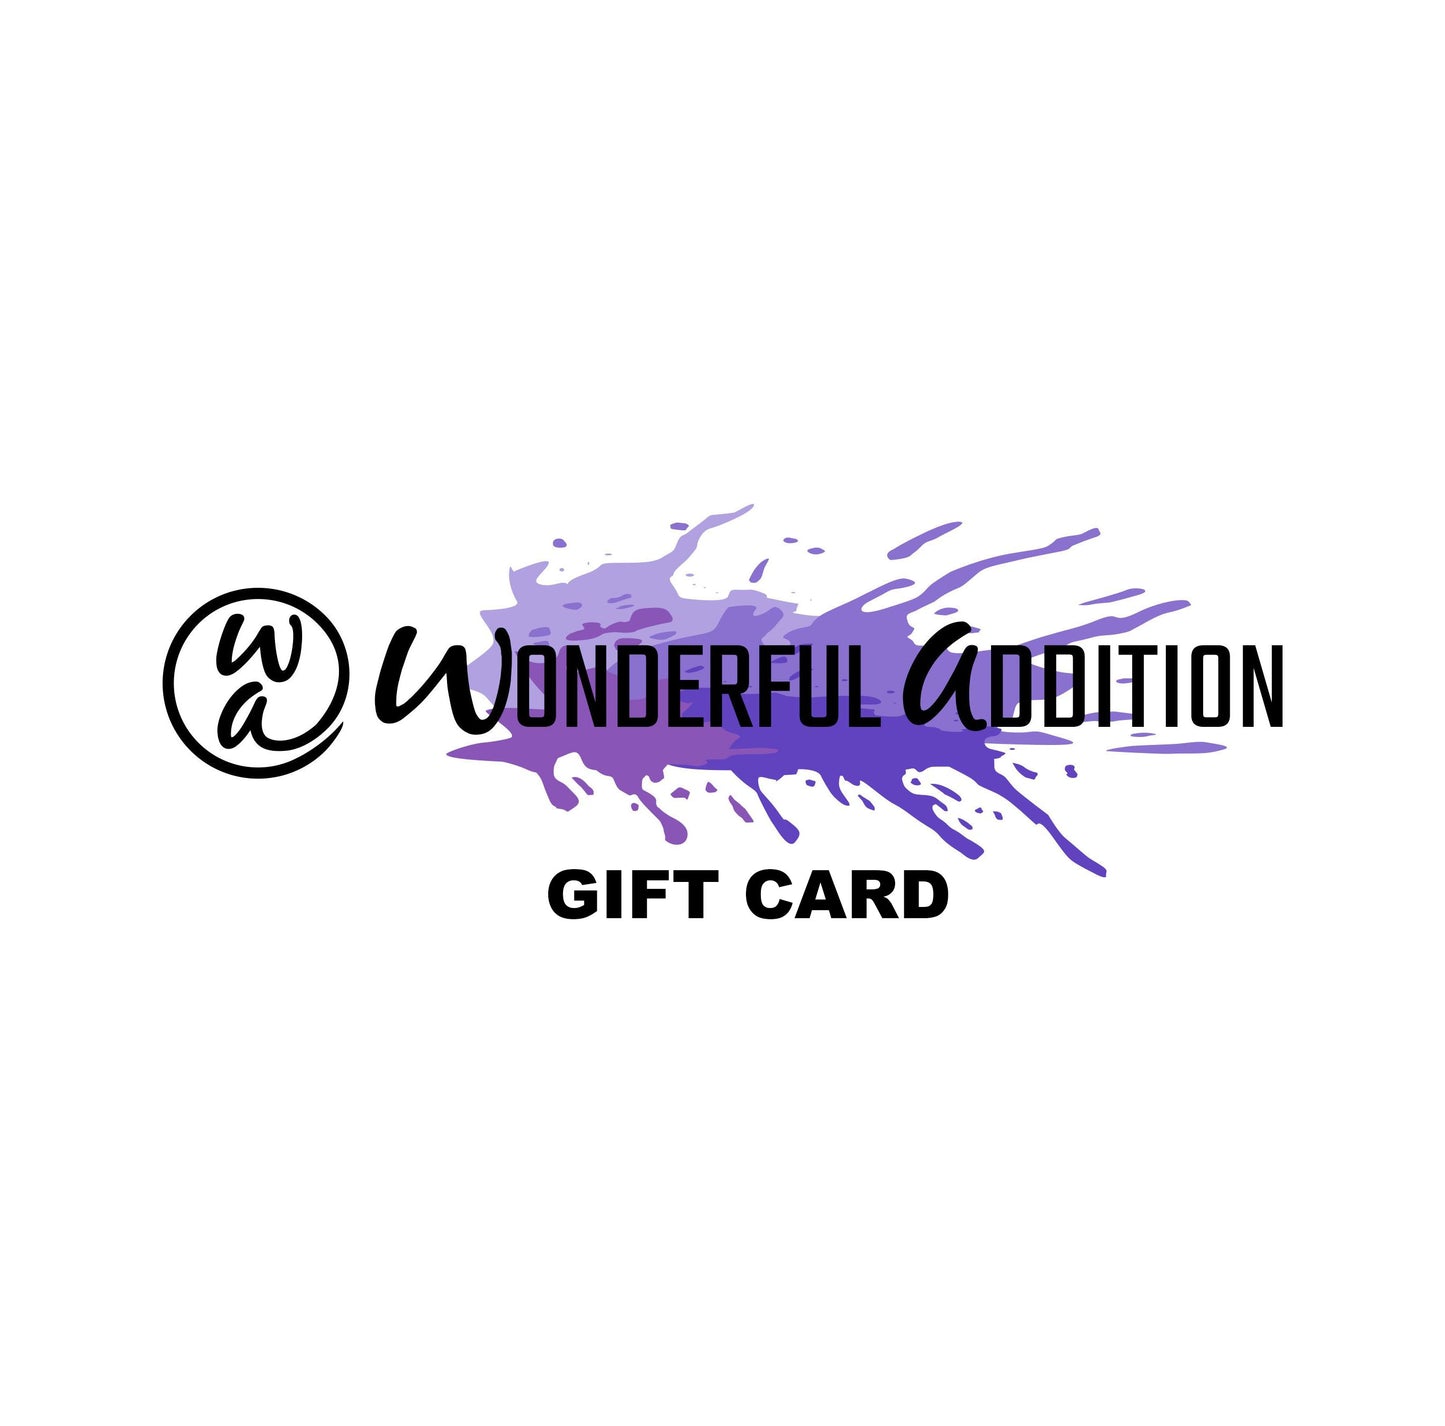 Gift Cards - $100.00 - Wonderful Addition